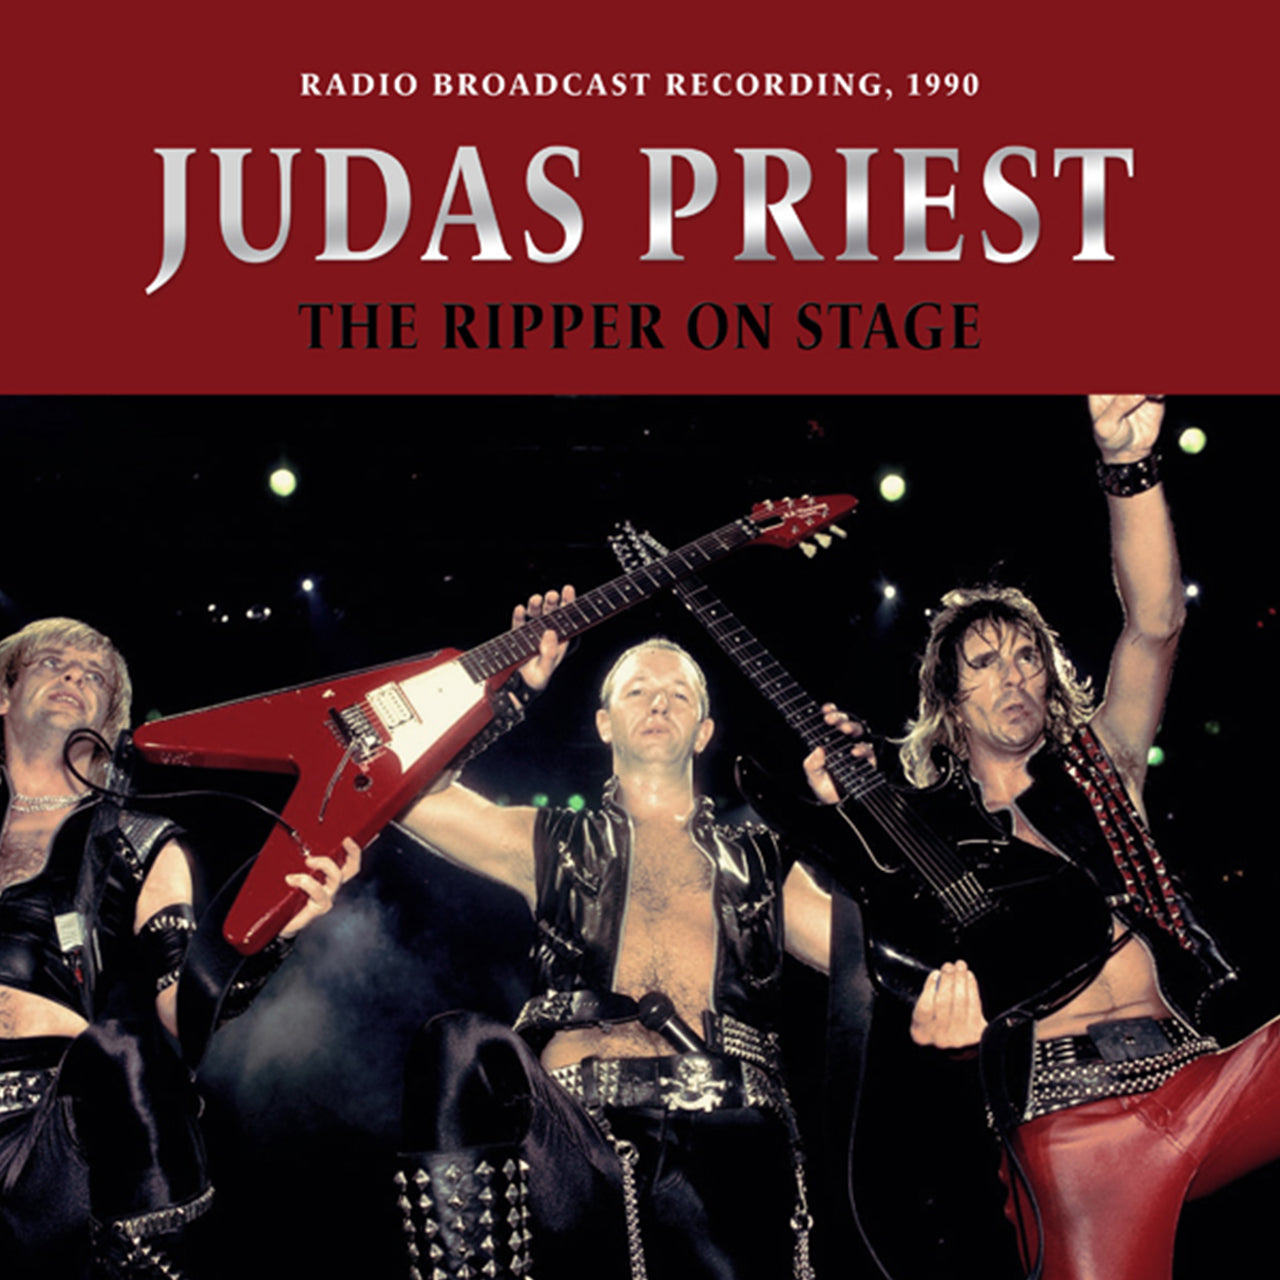 JUDAS PRIEST - The Ripper On Stage (Radio Broadcast 1990) - LP - Coloured Vinyl